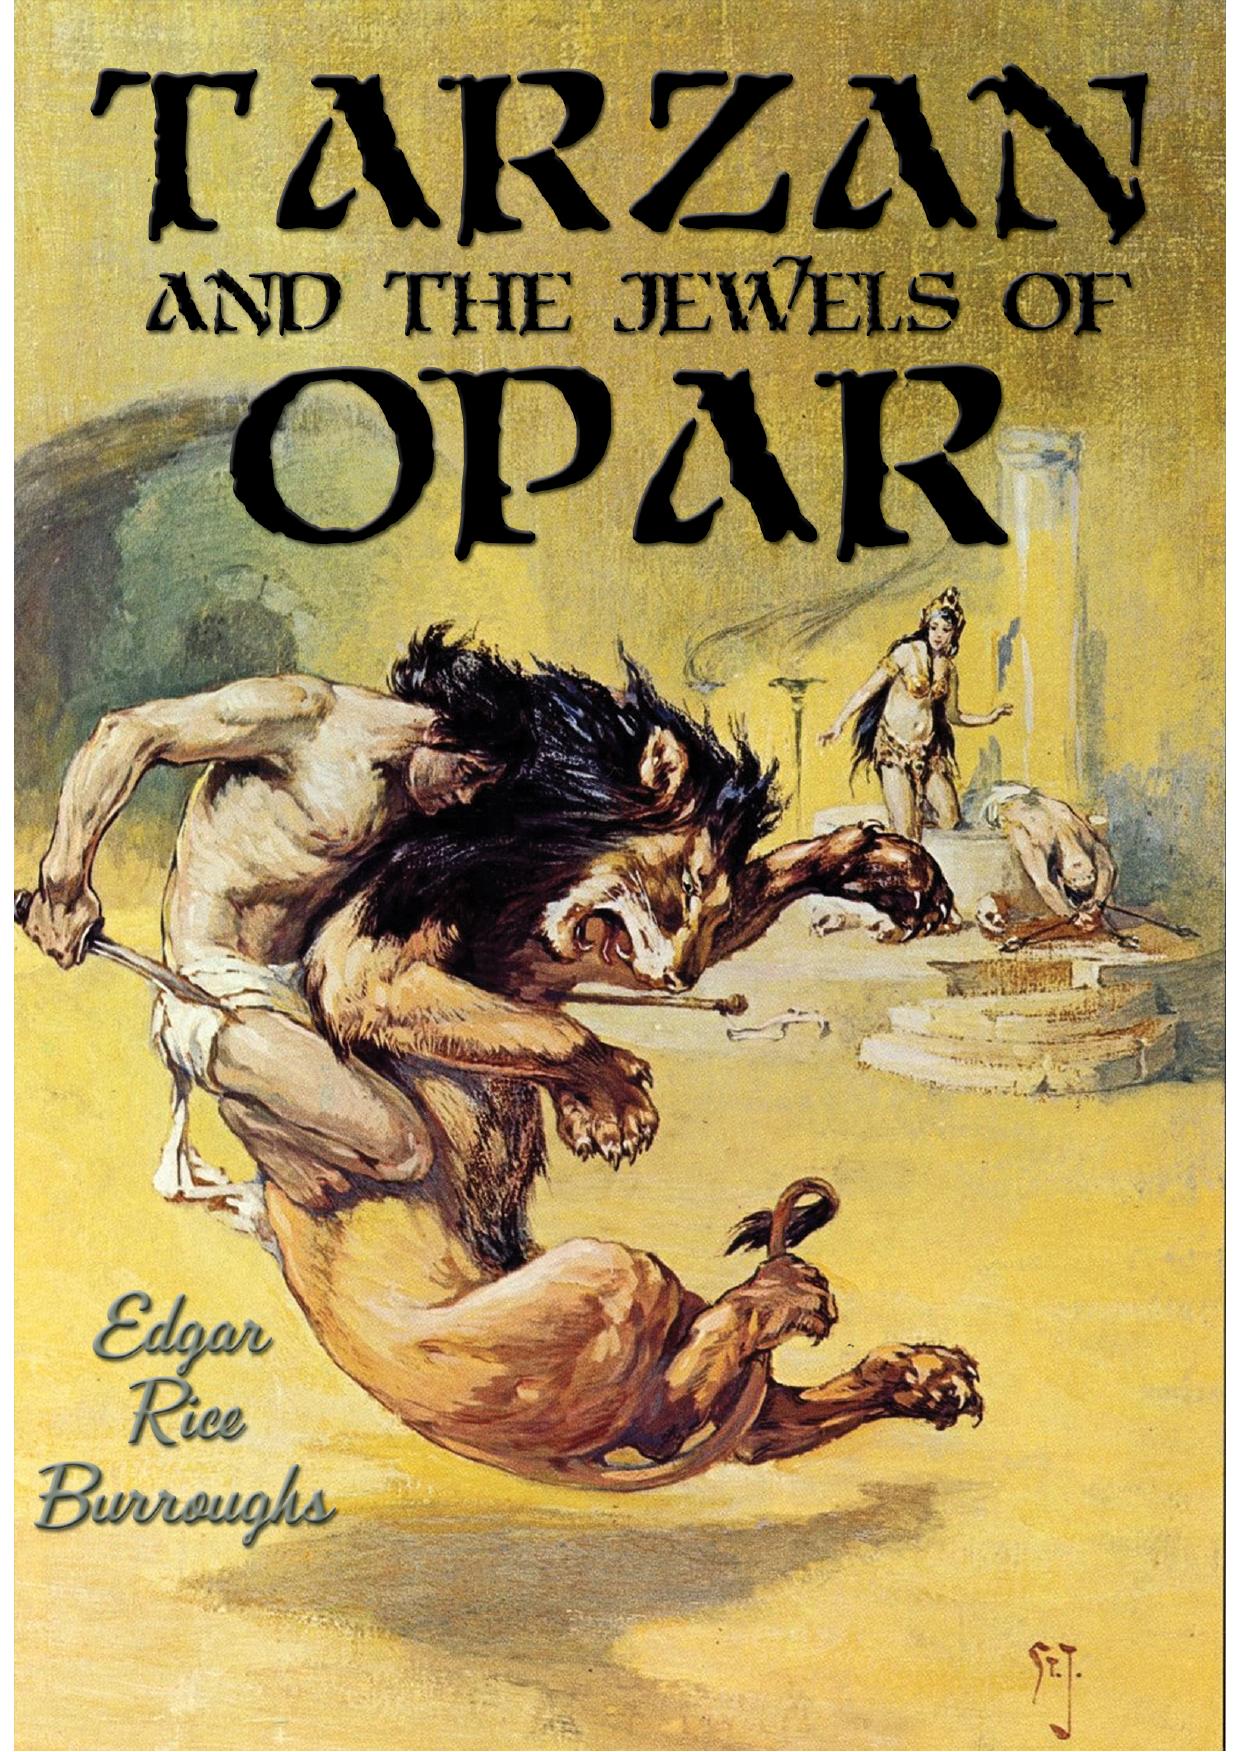 Cover art for Tarzan Series, Book 5: Tarzan and the Jewels of Opar.